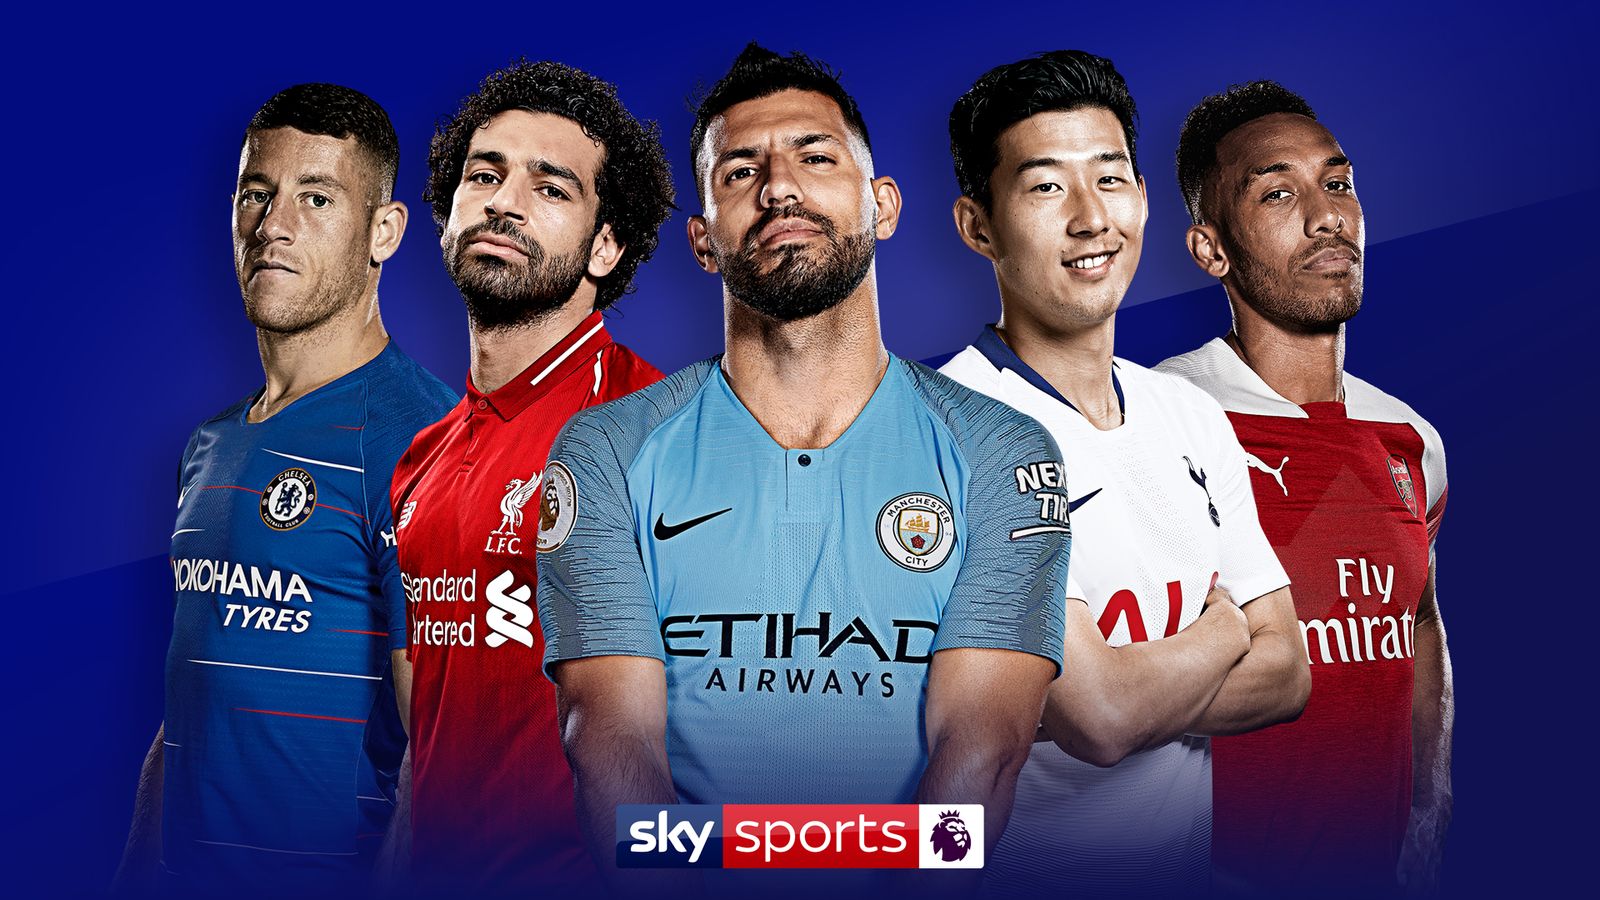 Premier League Fixtures 2019 20 Liverpool Face Norwich Man Utd Host Chelsea On Opening Weekend Football News Sky Sports